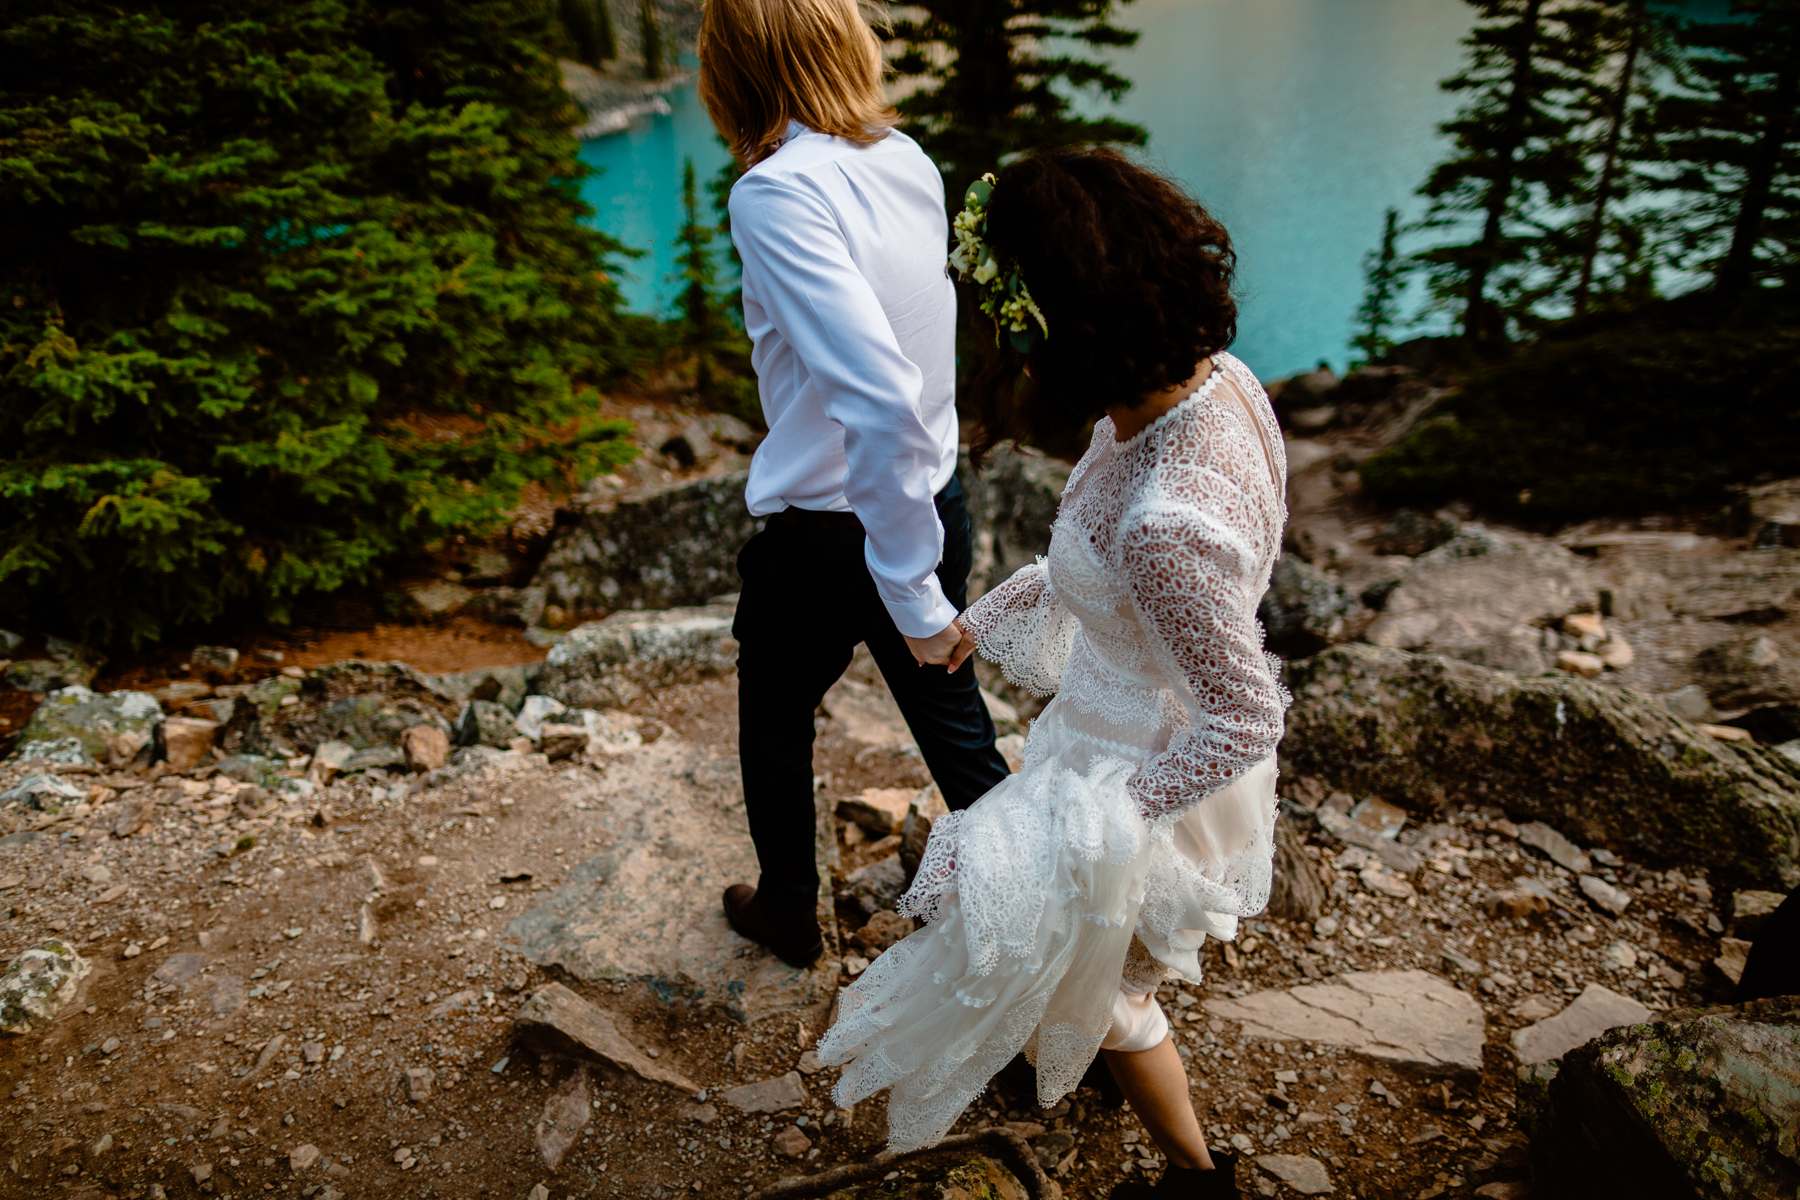 Banff Photographers at a Moraine Lake Post-Wedding Adventure Session - Photo 15